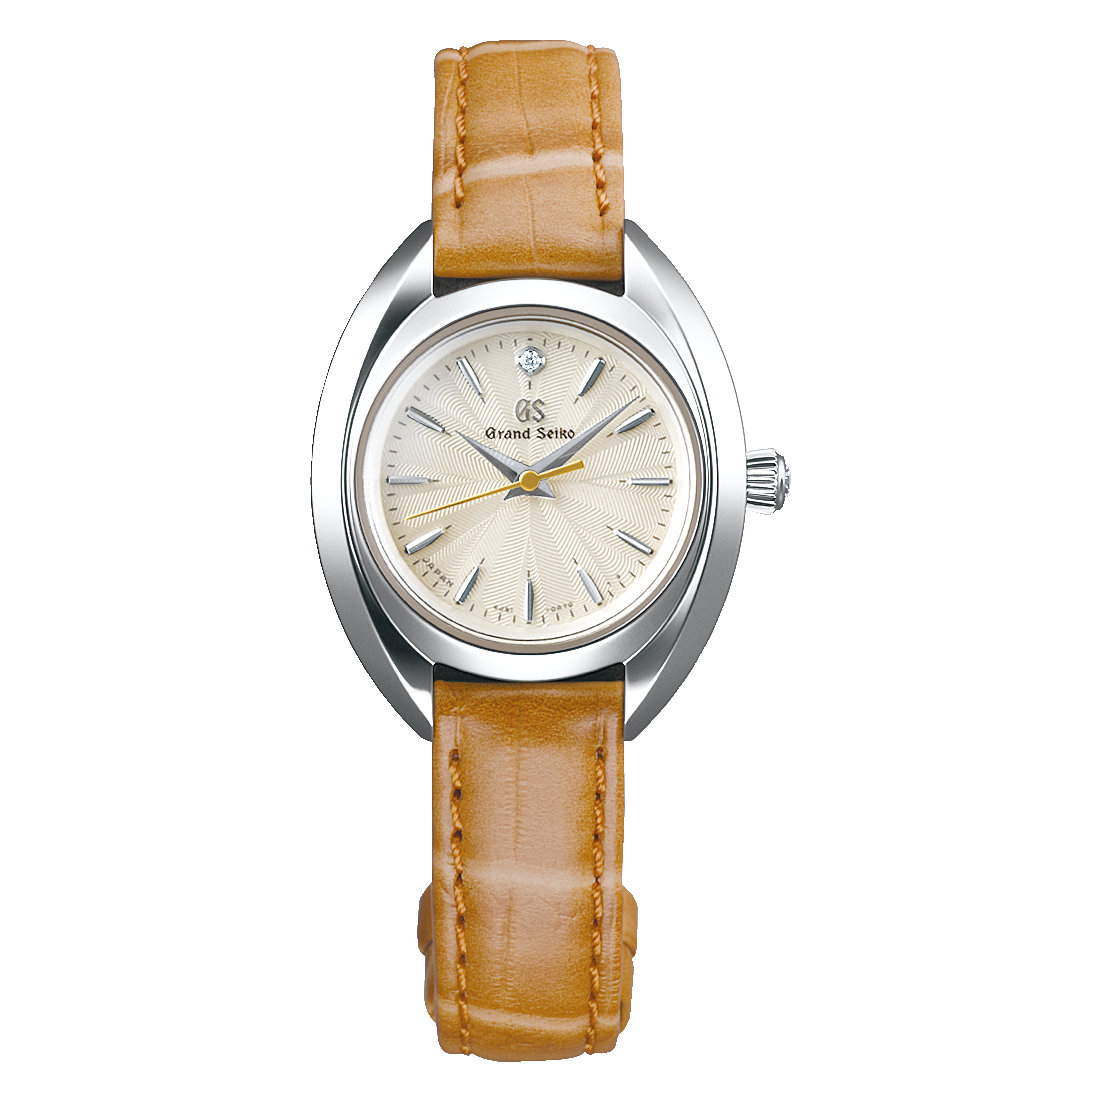 Grand Seiko Elegance Collection STGF355 Battery-powered quartz watch - IPPO JAPAN WATCH 